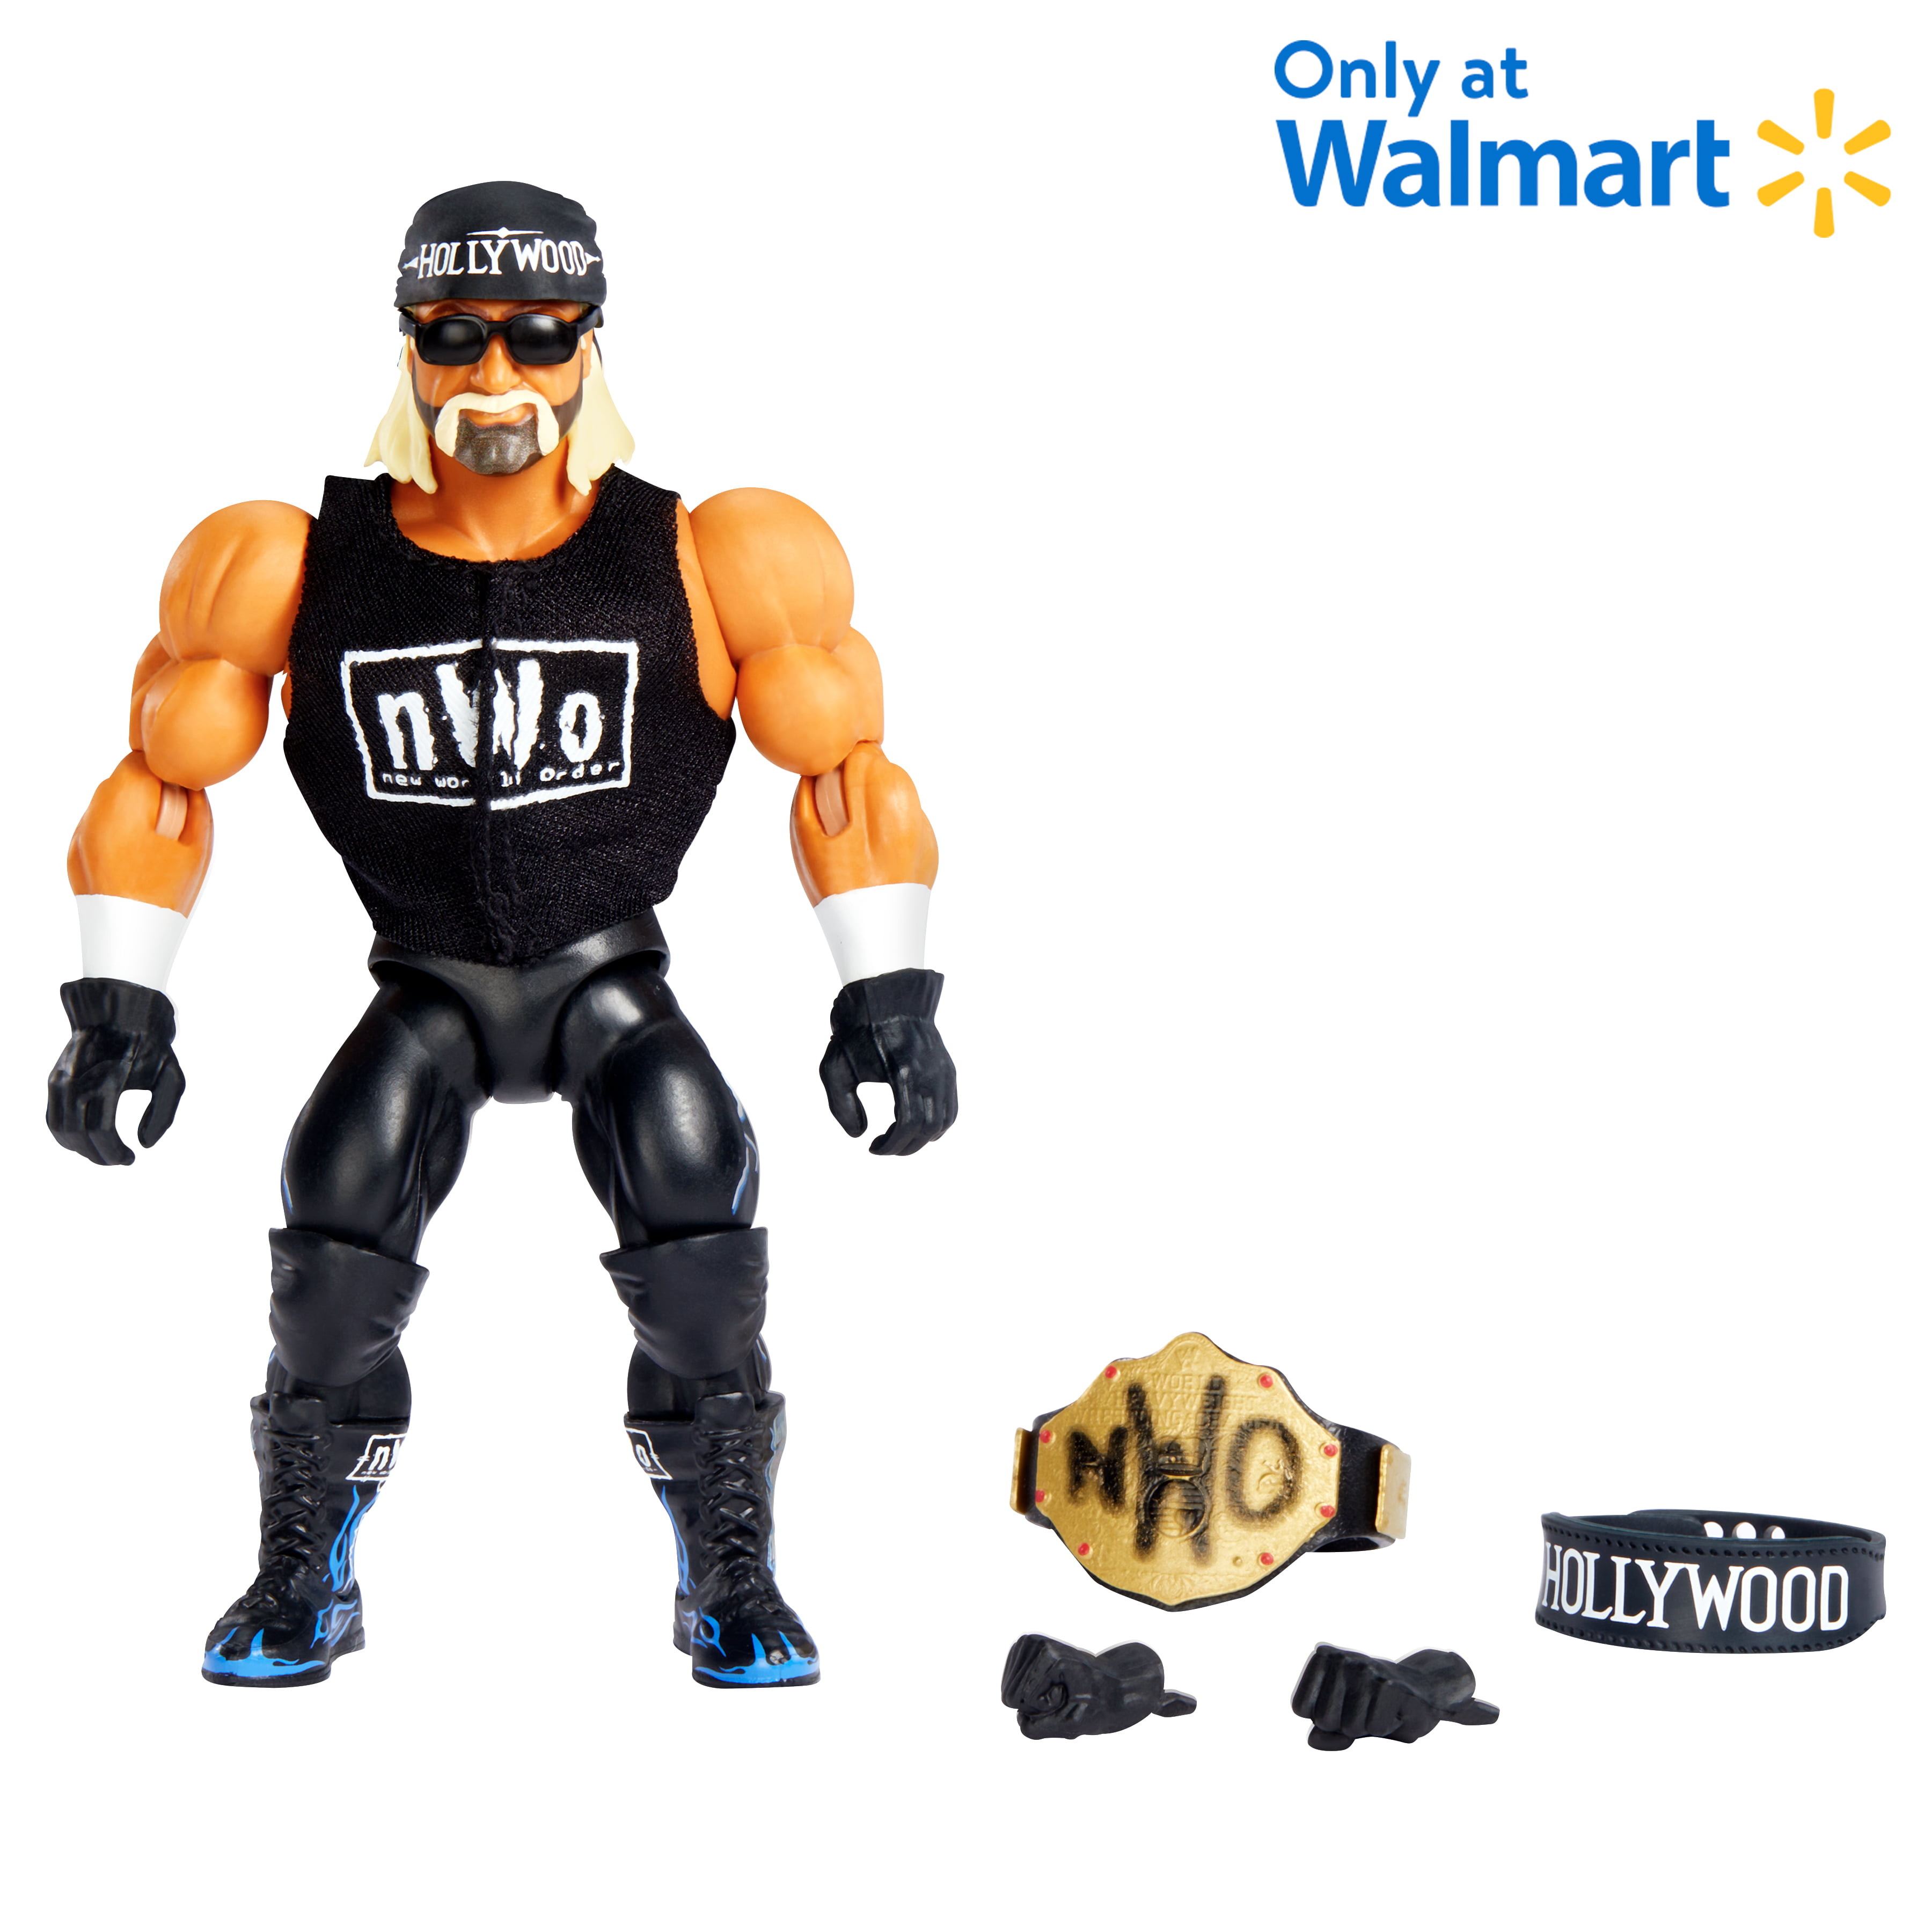 WWE WCW Wrestling Action Figures YOUR CHOICE Hulk Hogan STING Rock WWF 